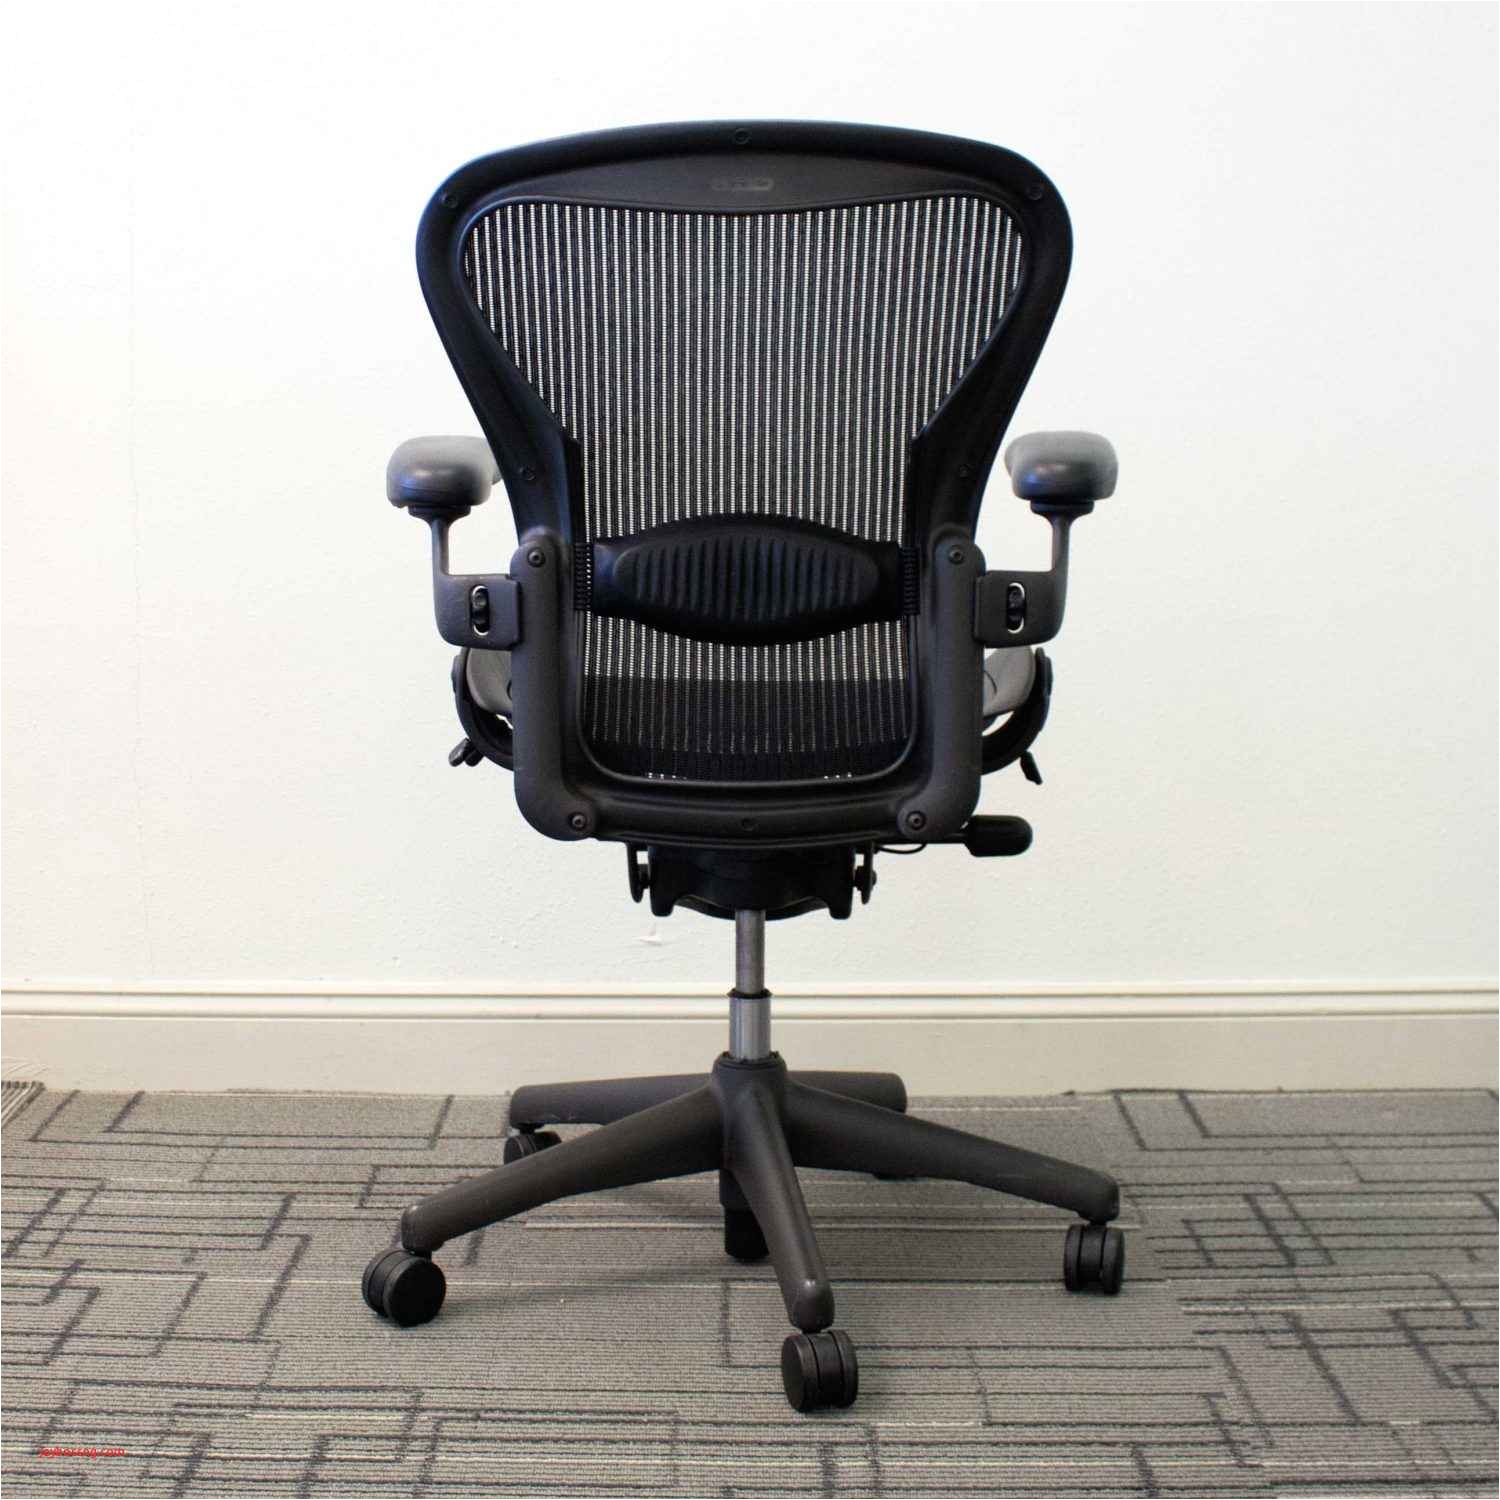 Herman Miller Aeron Chair Sizes Aeron Chair Sizes Created Used Herman Miller Aeron Chairs Size B